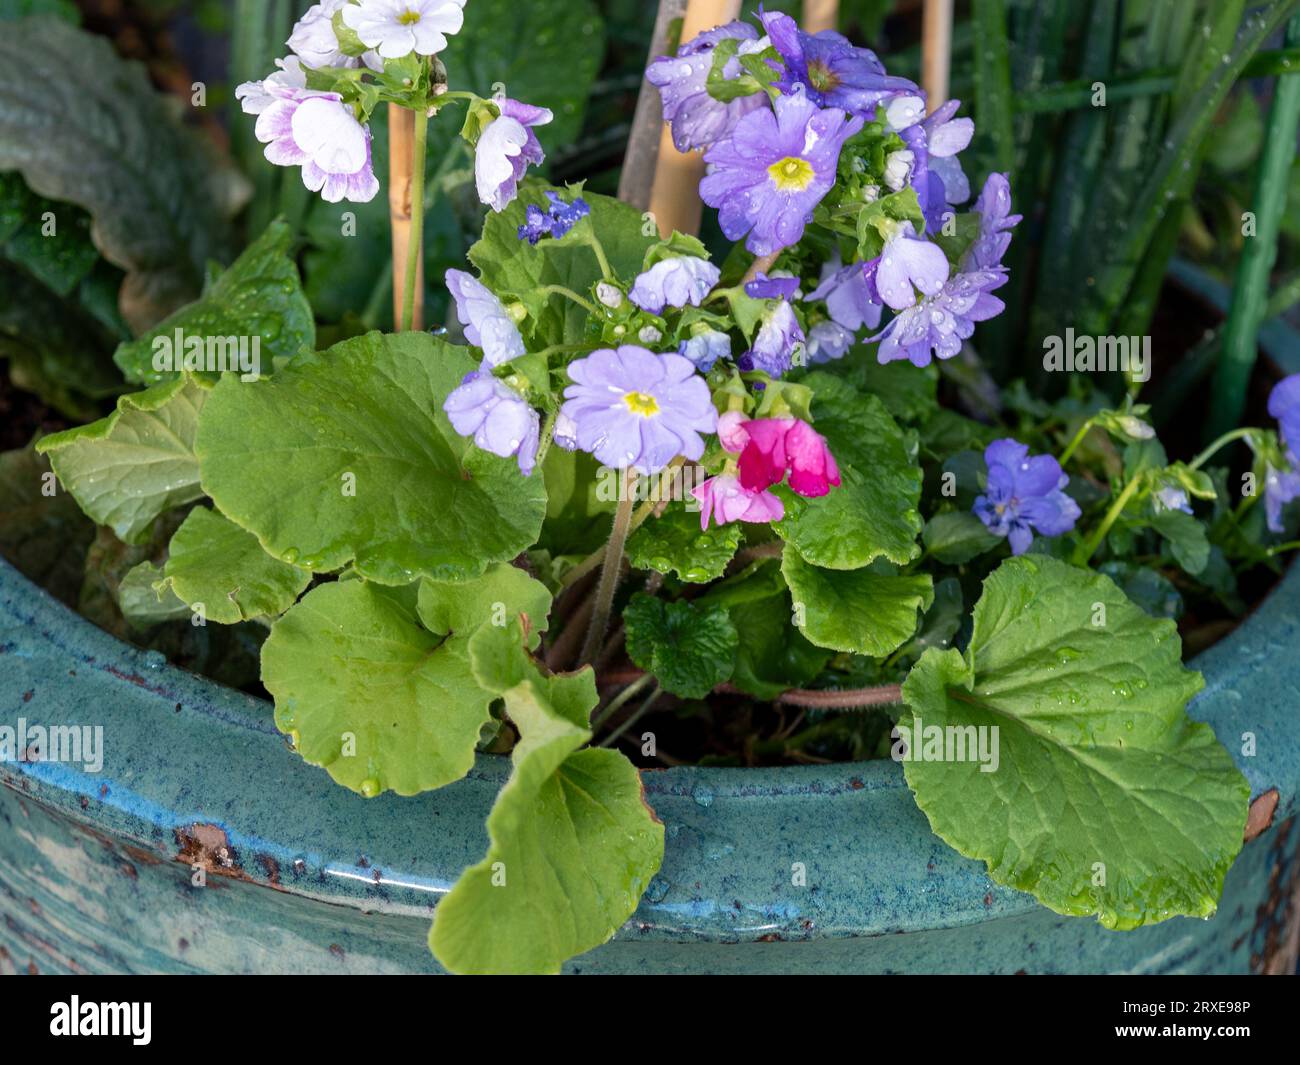 Mauve purple Primula flowers in a blue green ceramic plant pot Stock Photo